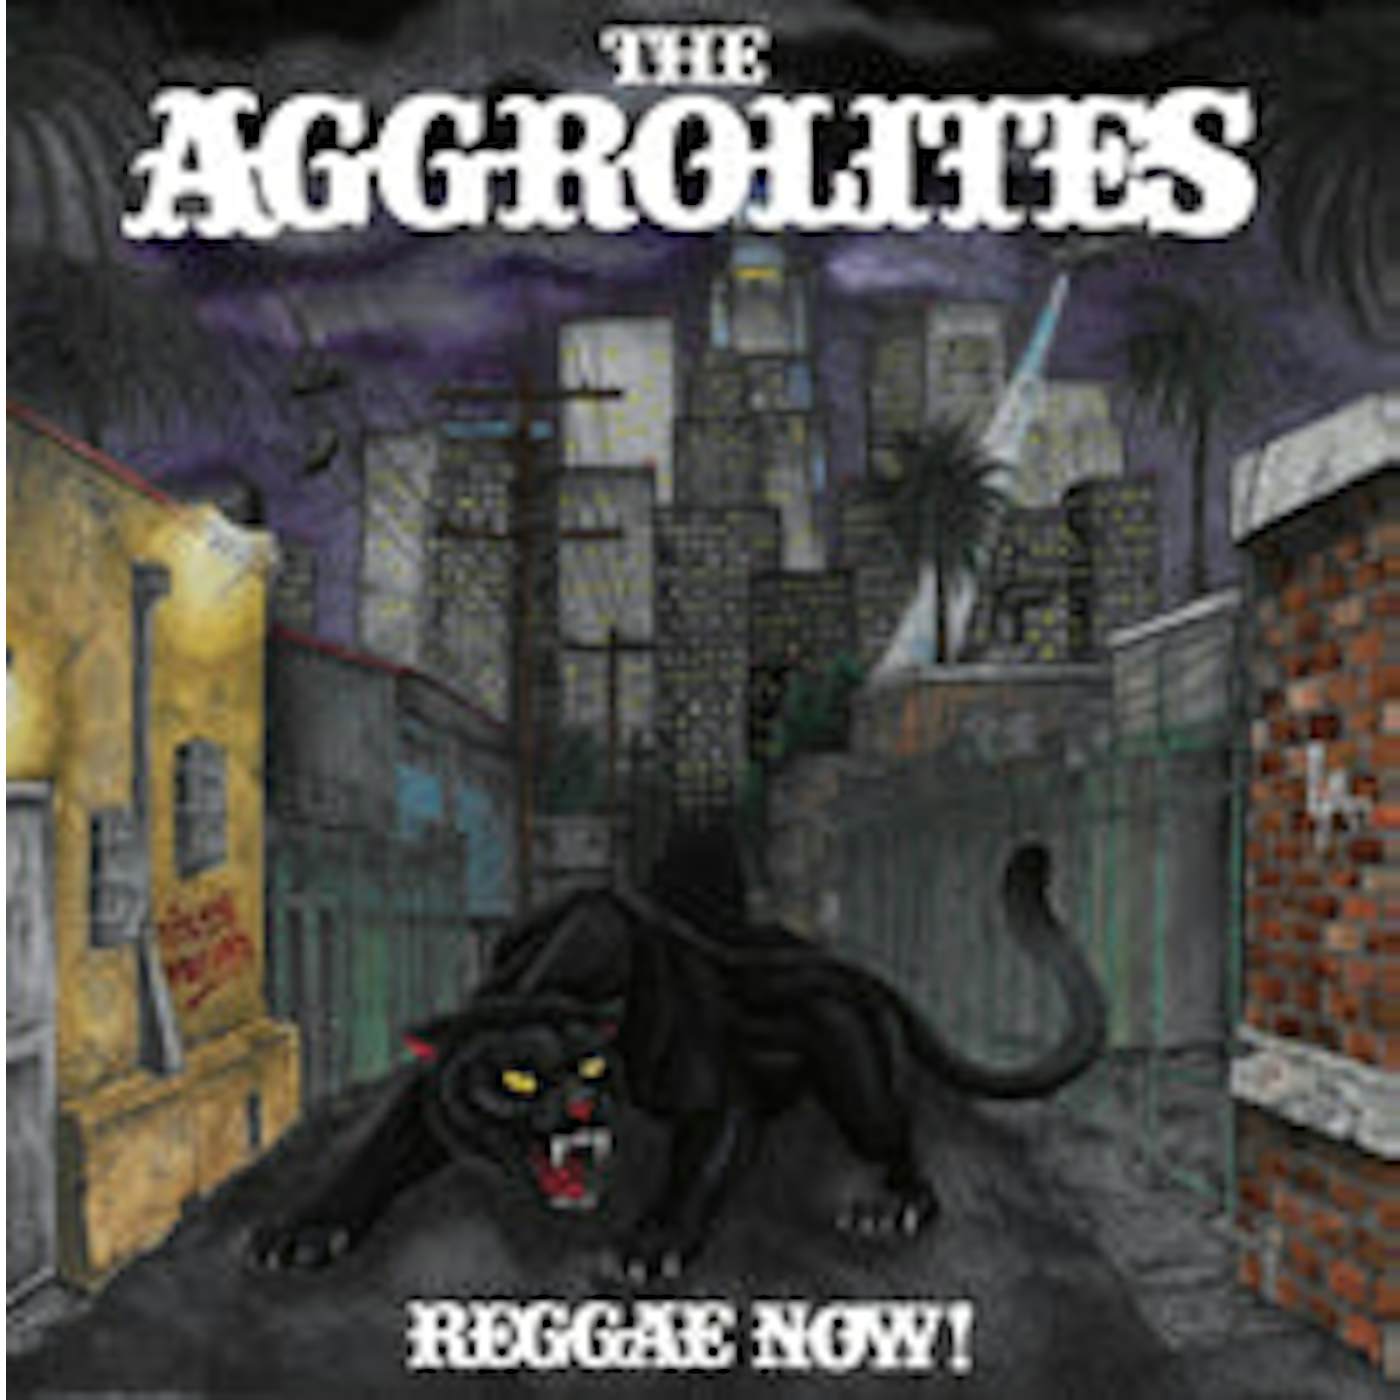 The Aggrolites LP - Reggae Now! (Vinyl)